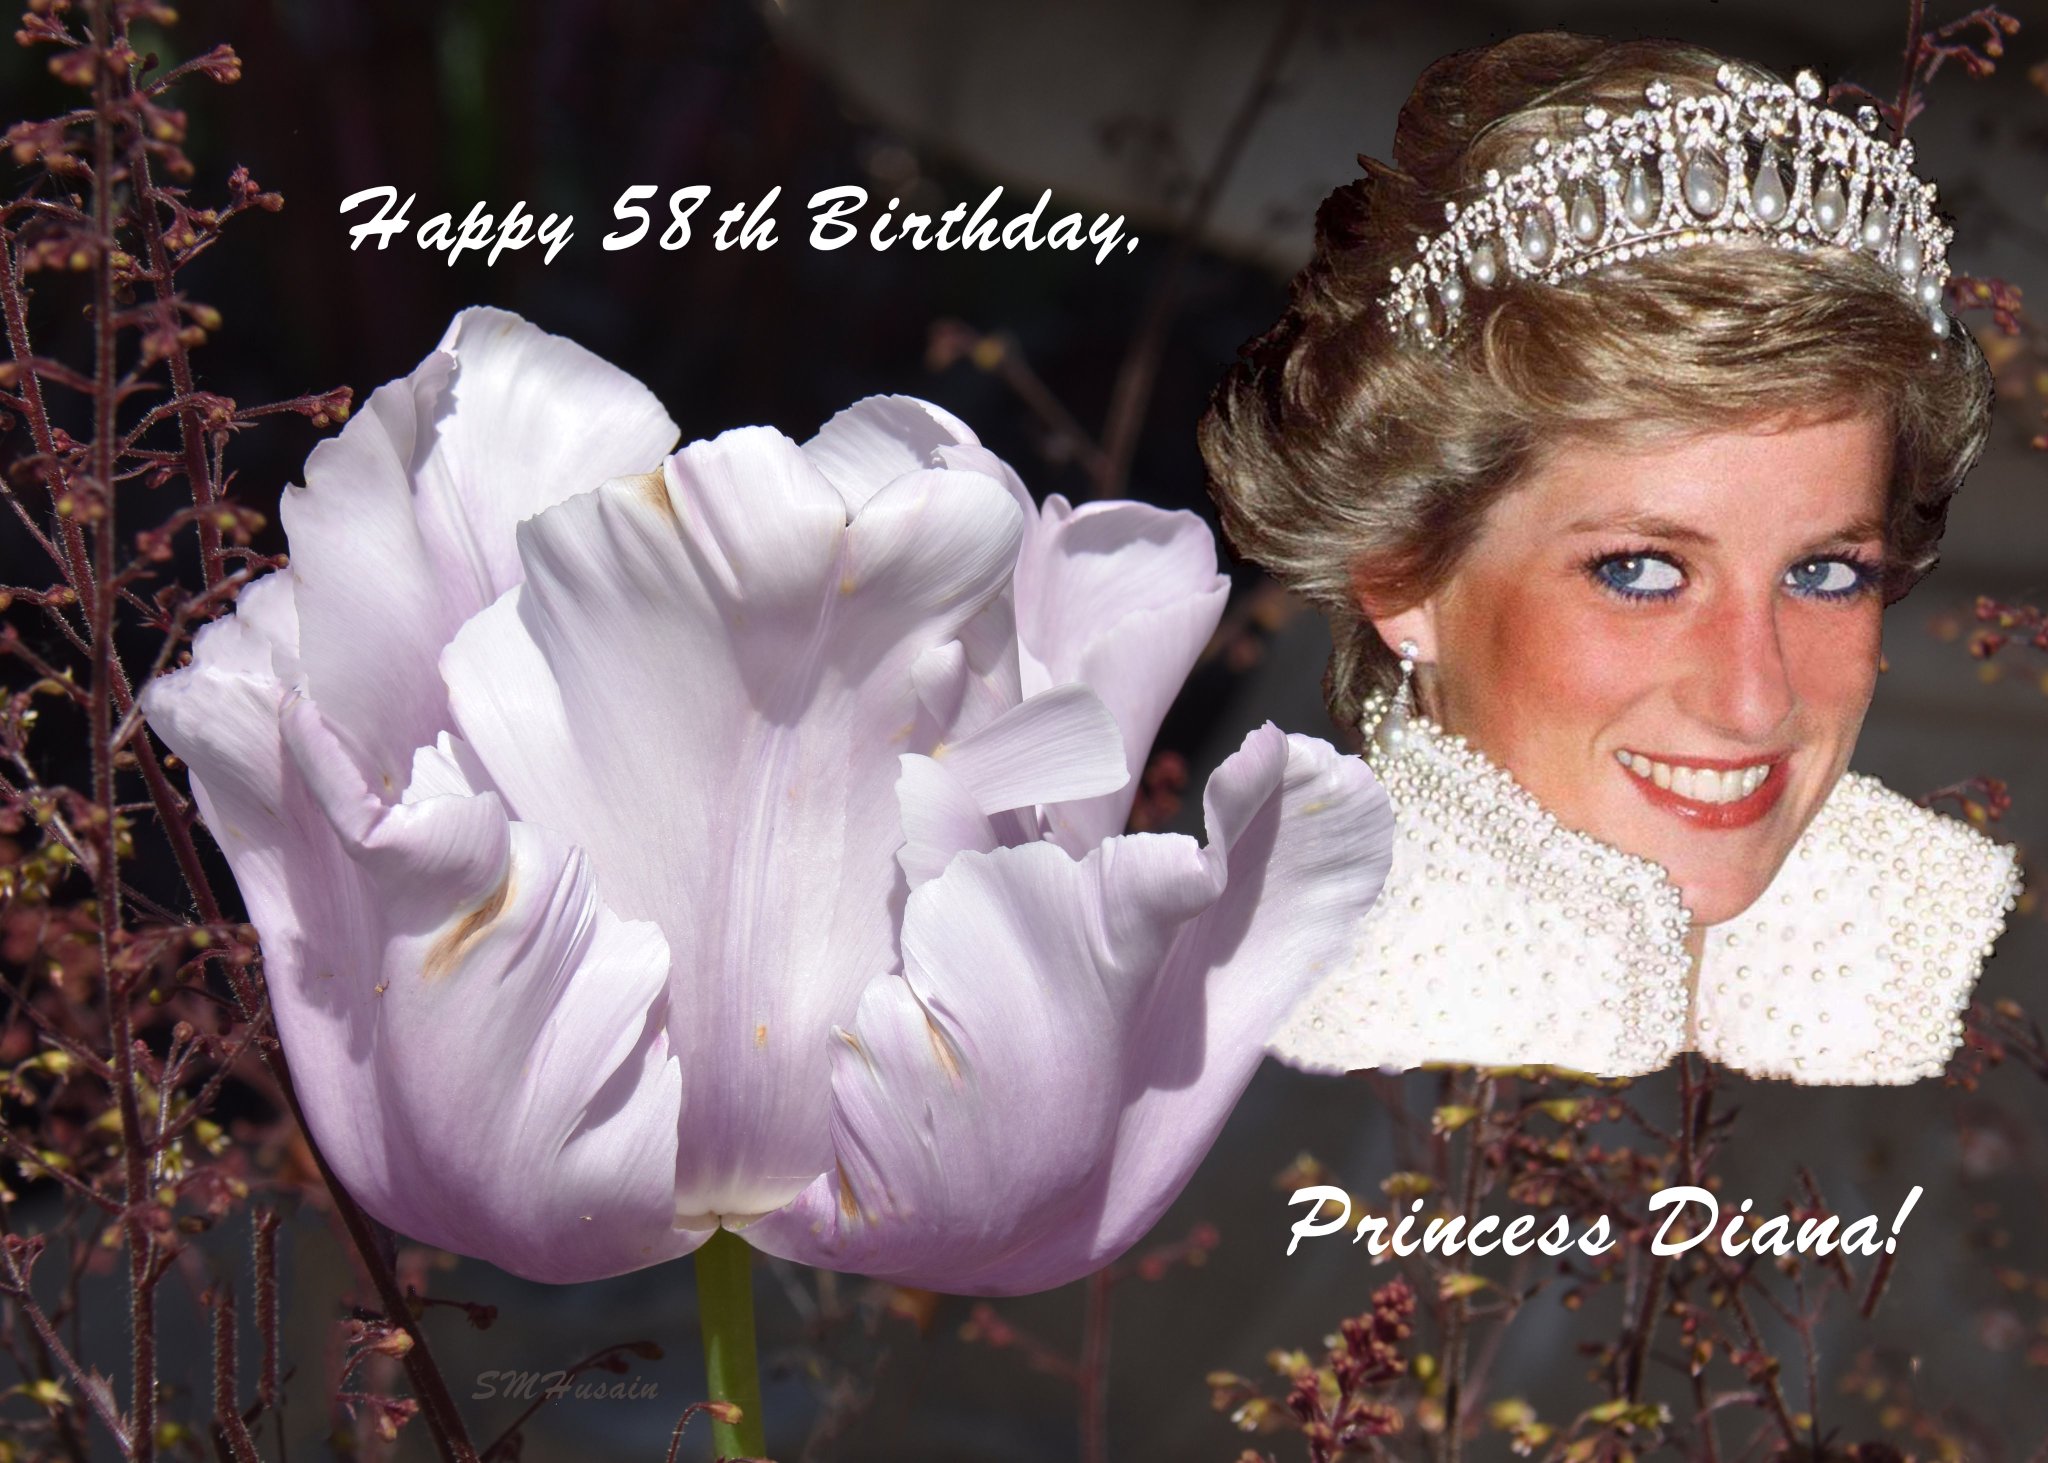  Happy 58th Birthday Anniversary to Princess Diana, The People\s Princess! 